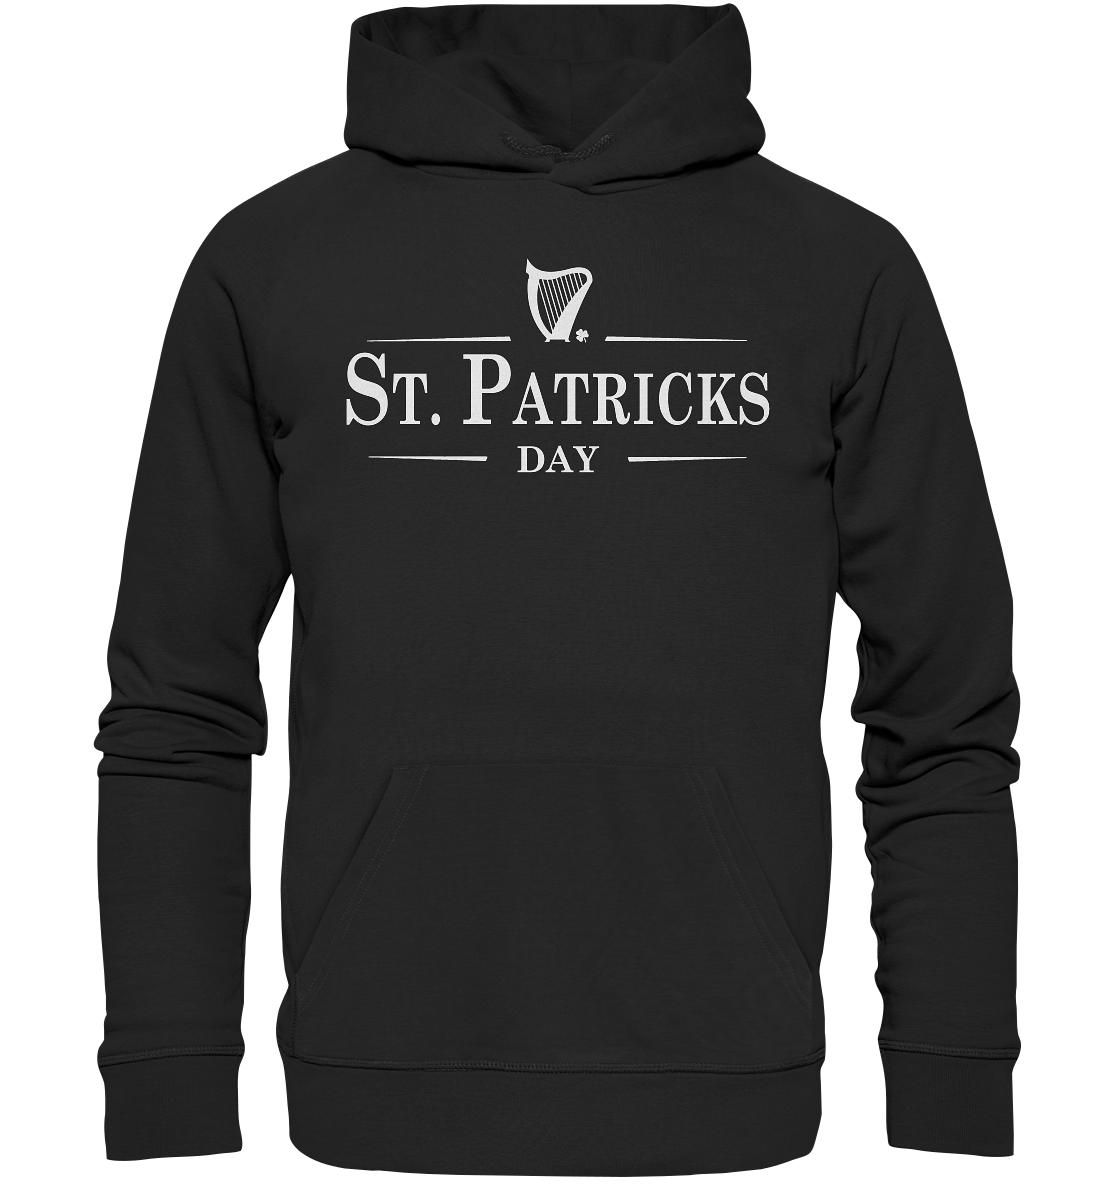 St. Patricks Day "Stout" - Premium Unisex Hoodie